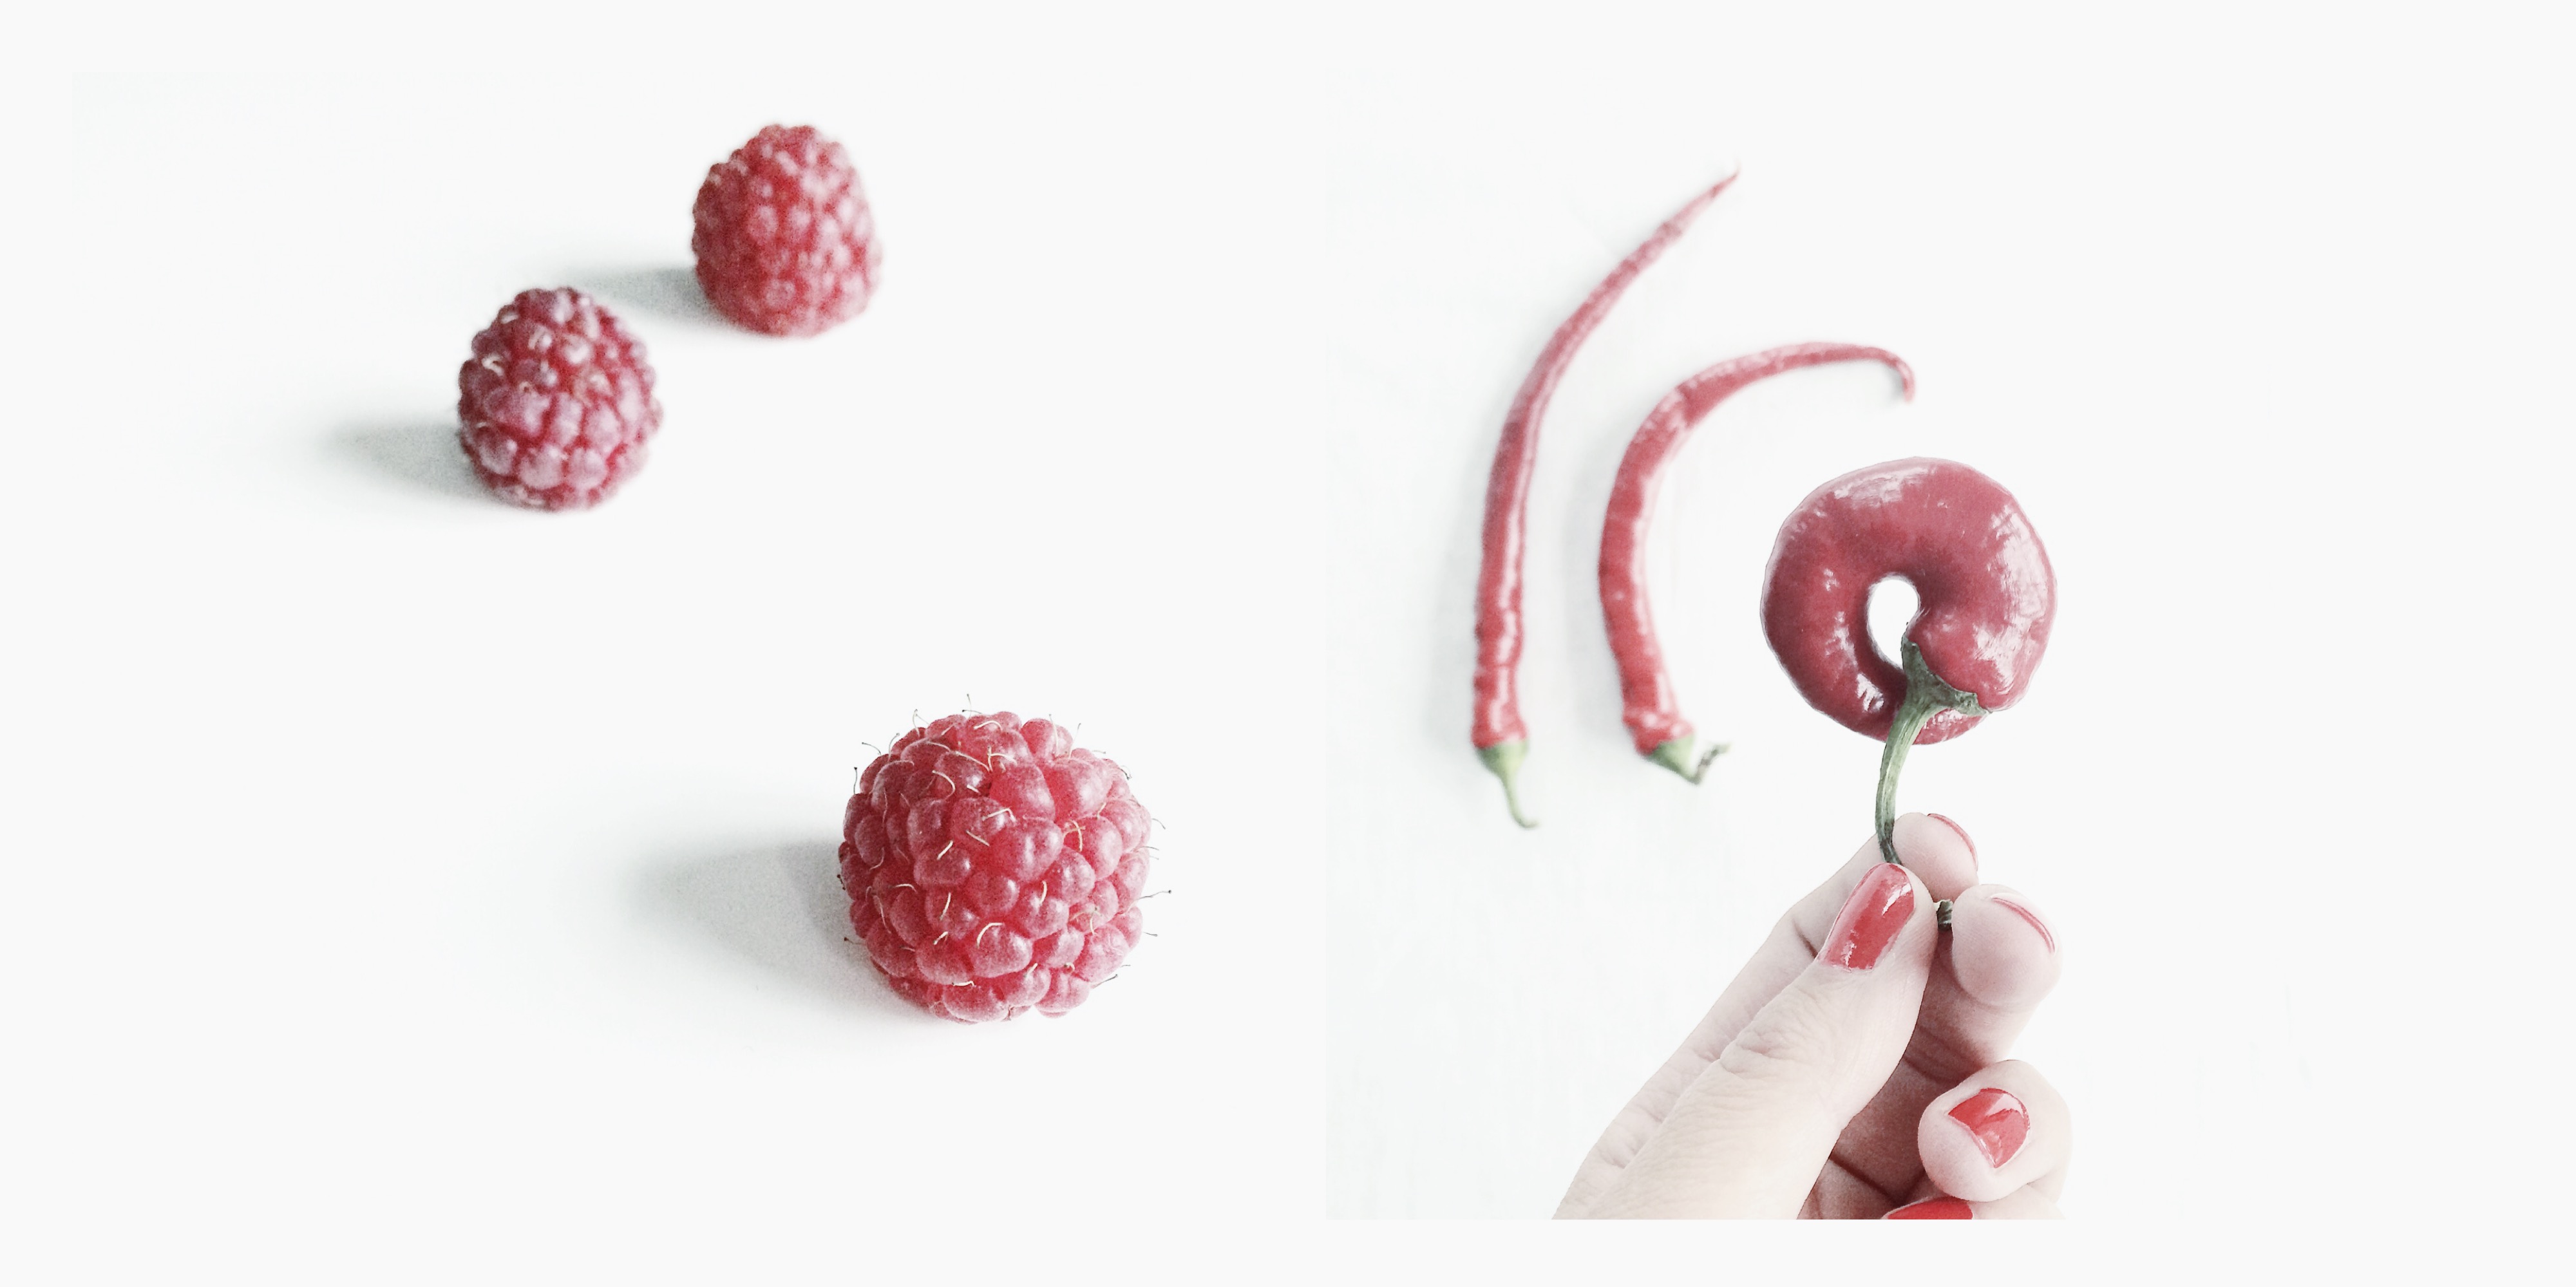 Collage-Oktober-Instagram-Jennadores-Blog-Rückblick-Foodbilder-Chilli-Himbeeren